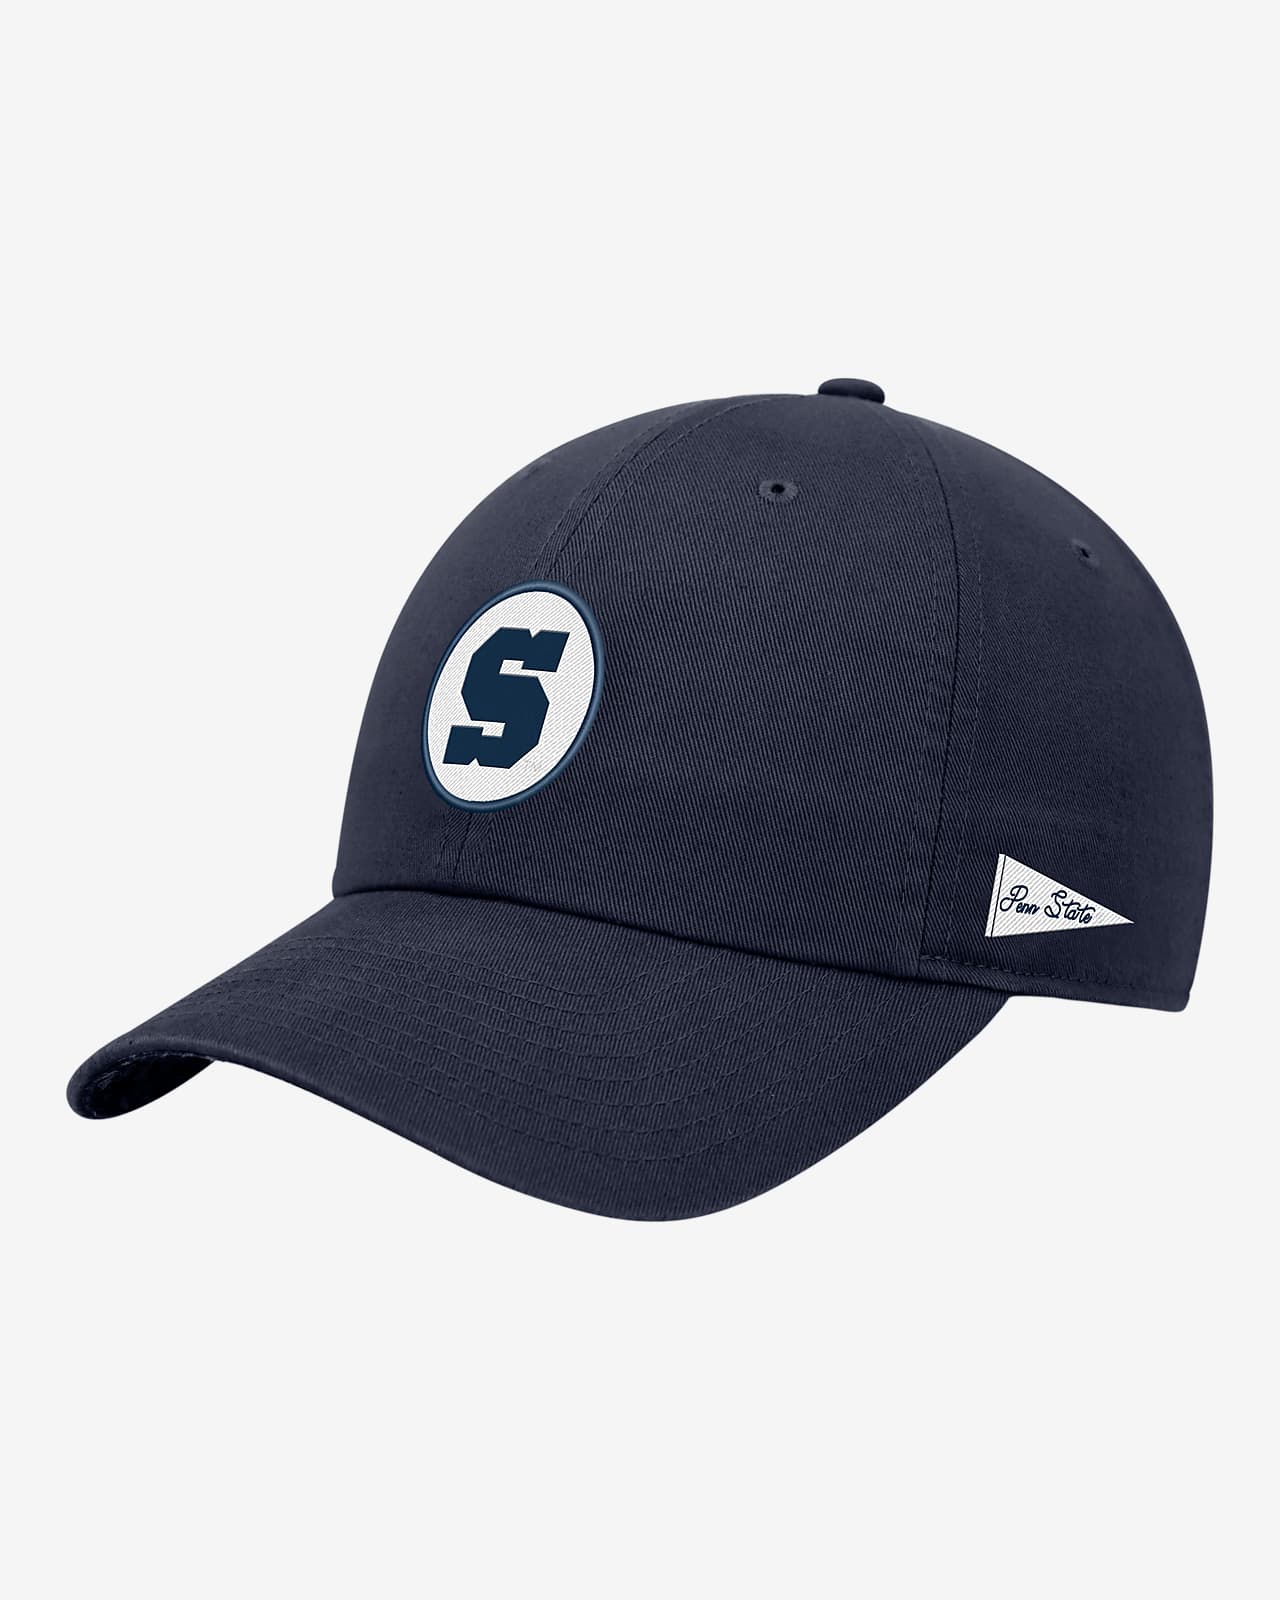 Penn State Logo Nike College Adjustable Cap